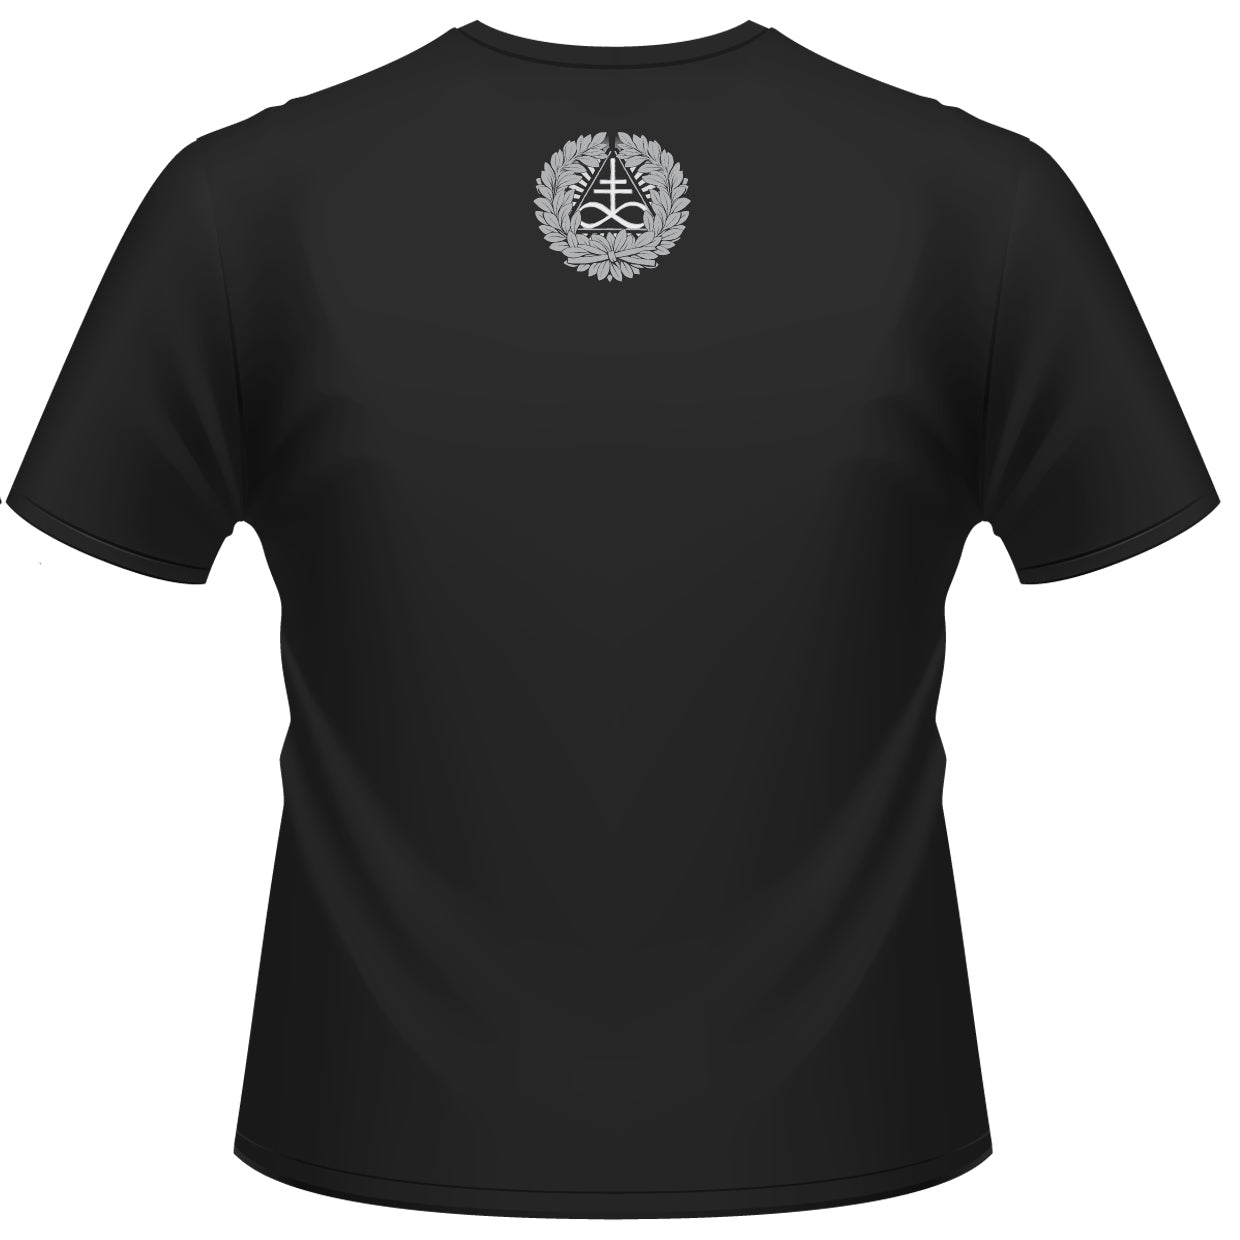 Behemoth - Abyssus Abyssum Invocat Short Sleeved T-shirt